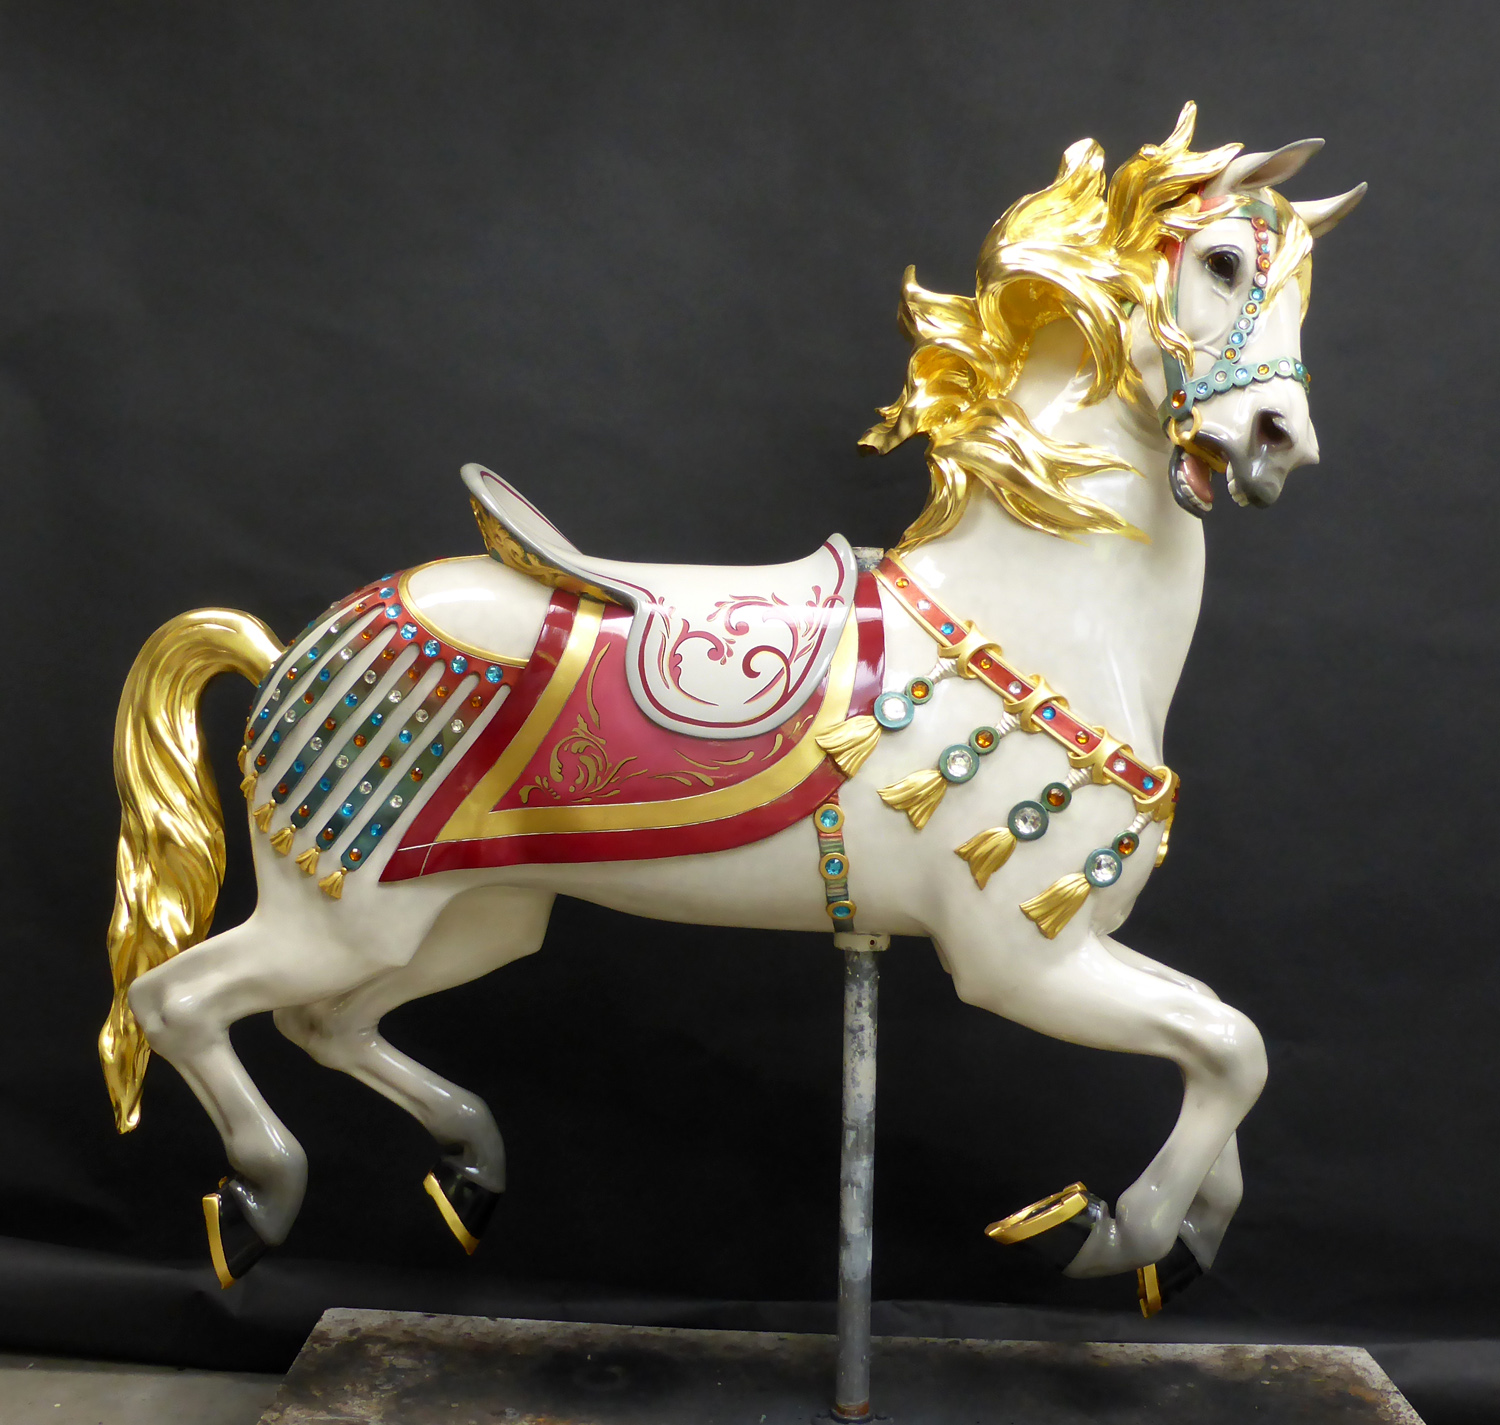 1927-Illions-supreme-carousel-horse-restored-lise-liepman-artist